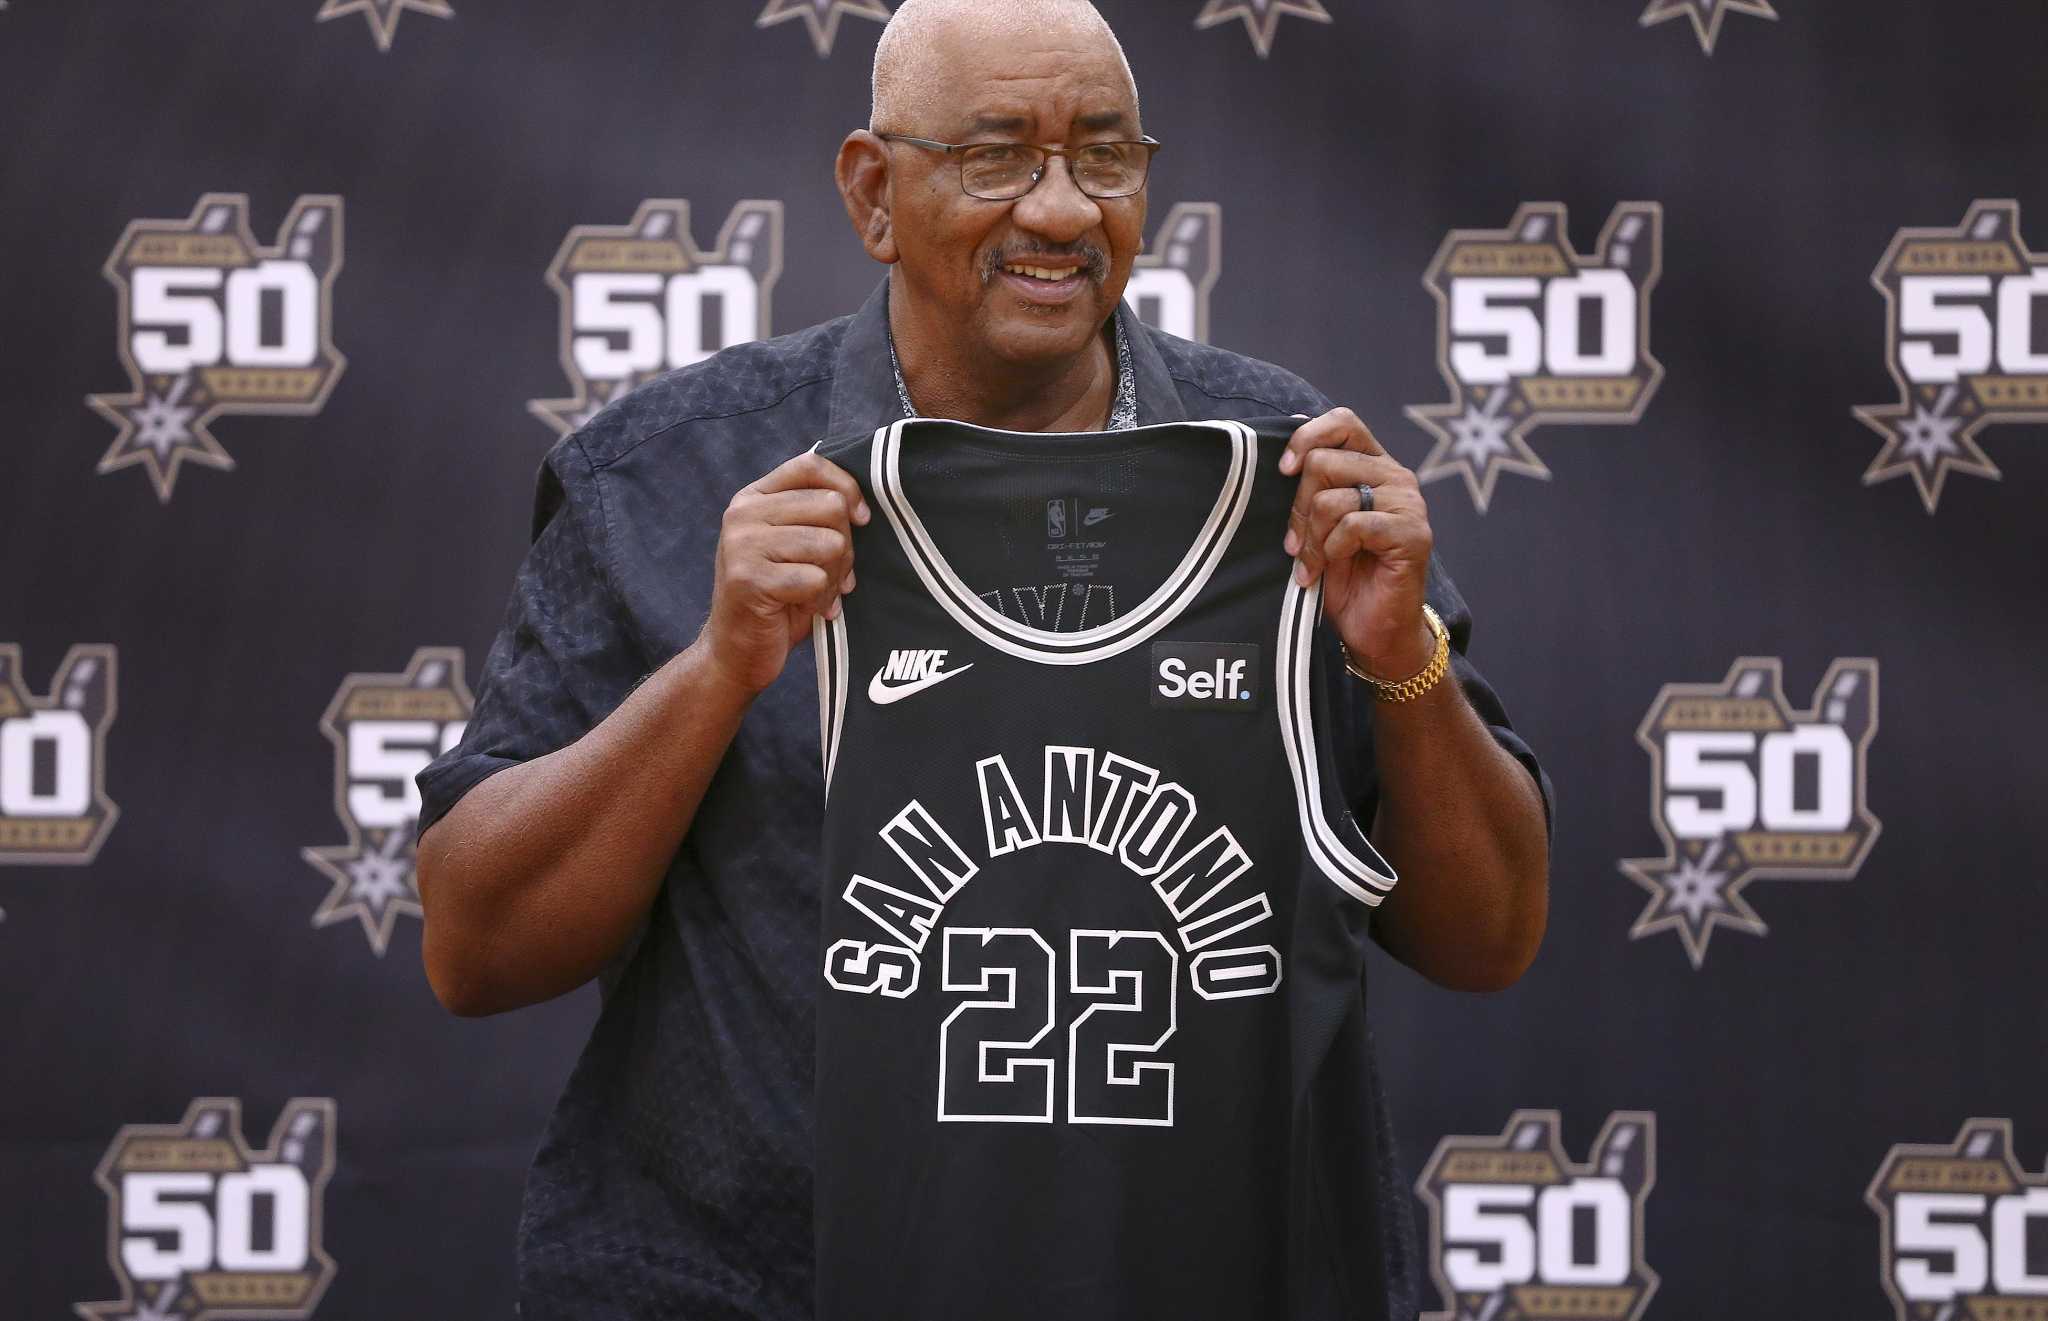 San Antonio Spurs Throwback Jerseys, Vintage NBA Gear